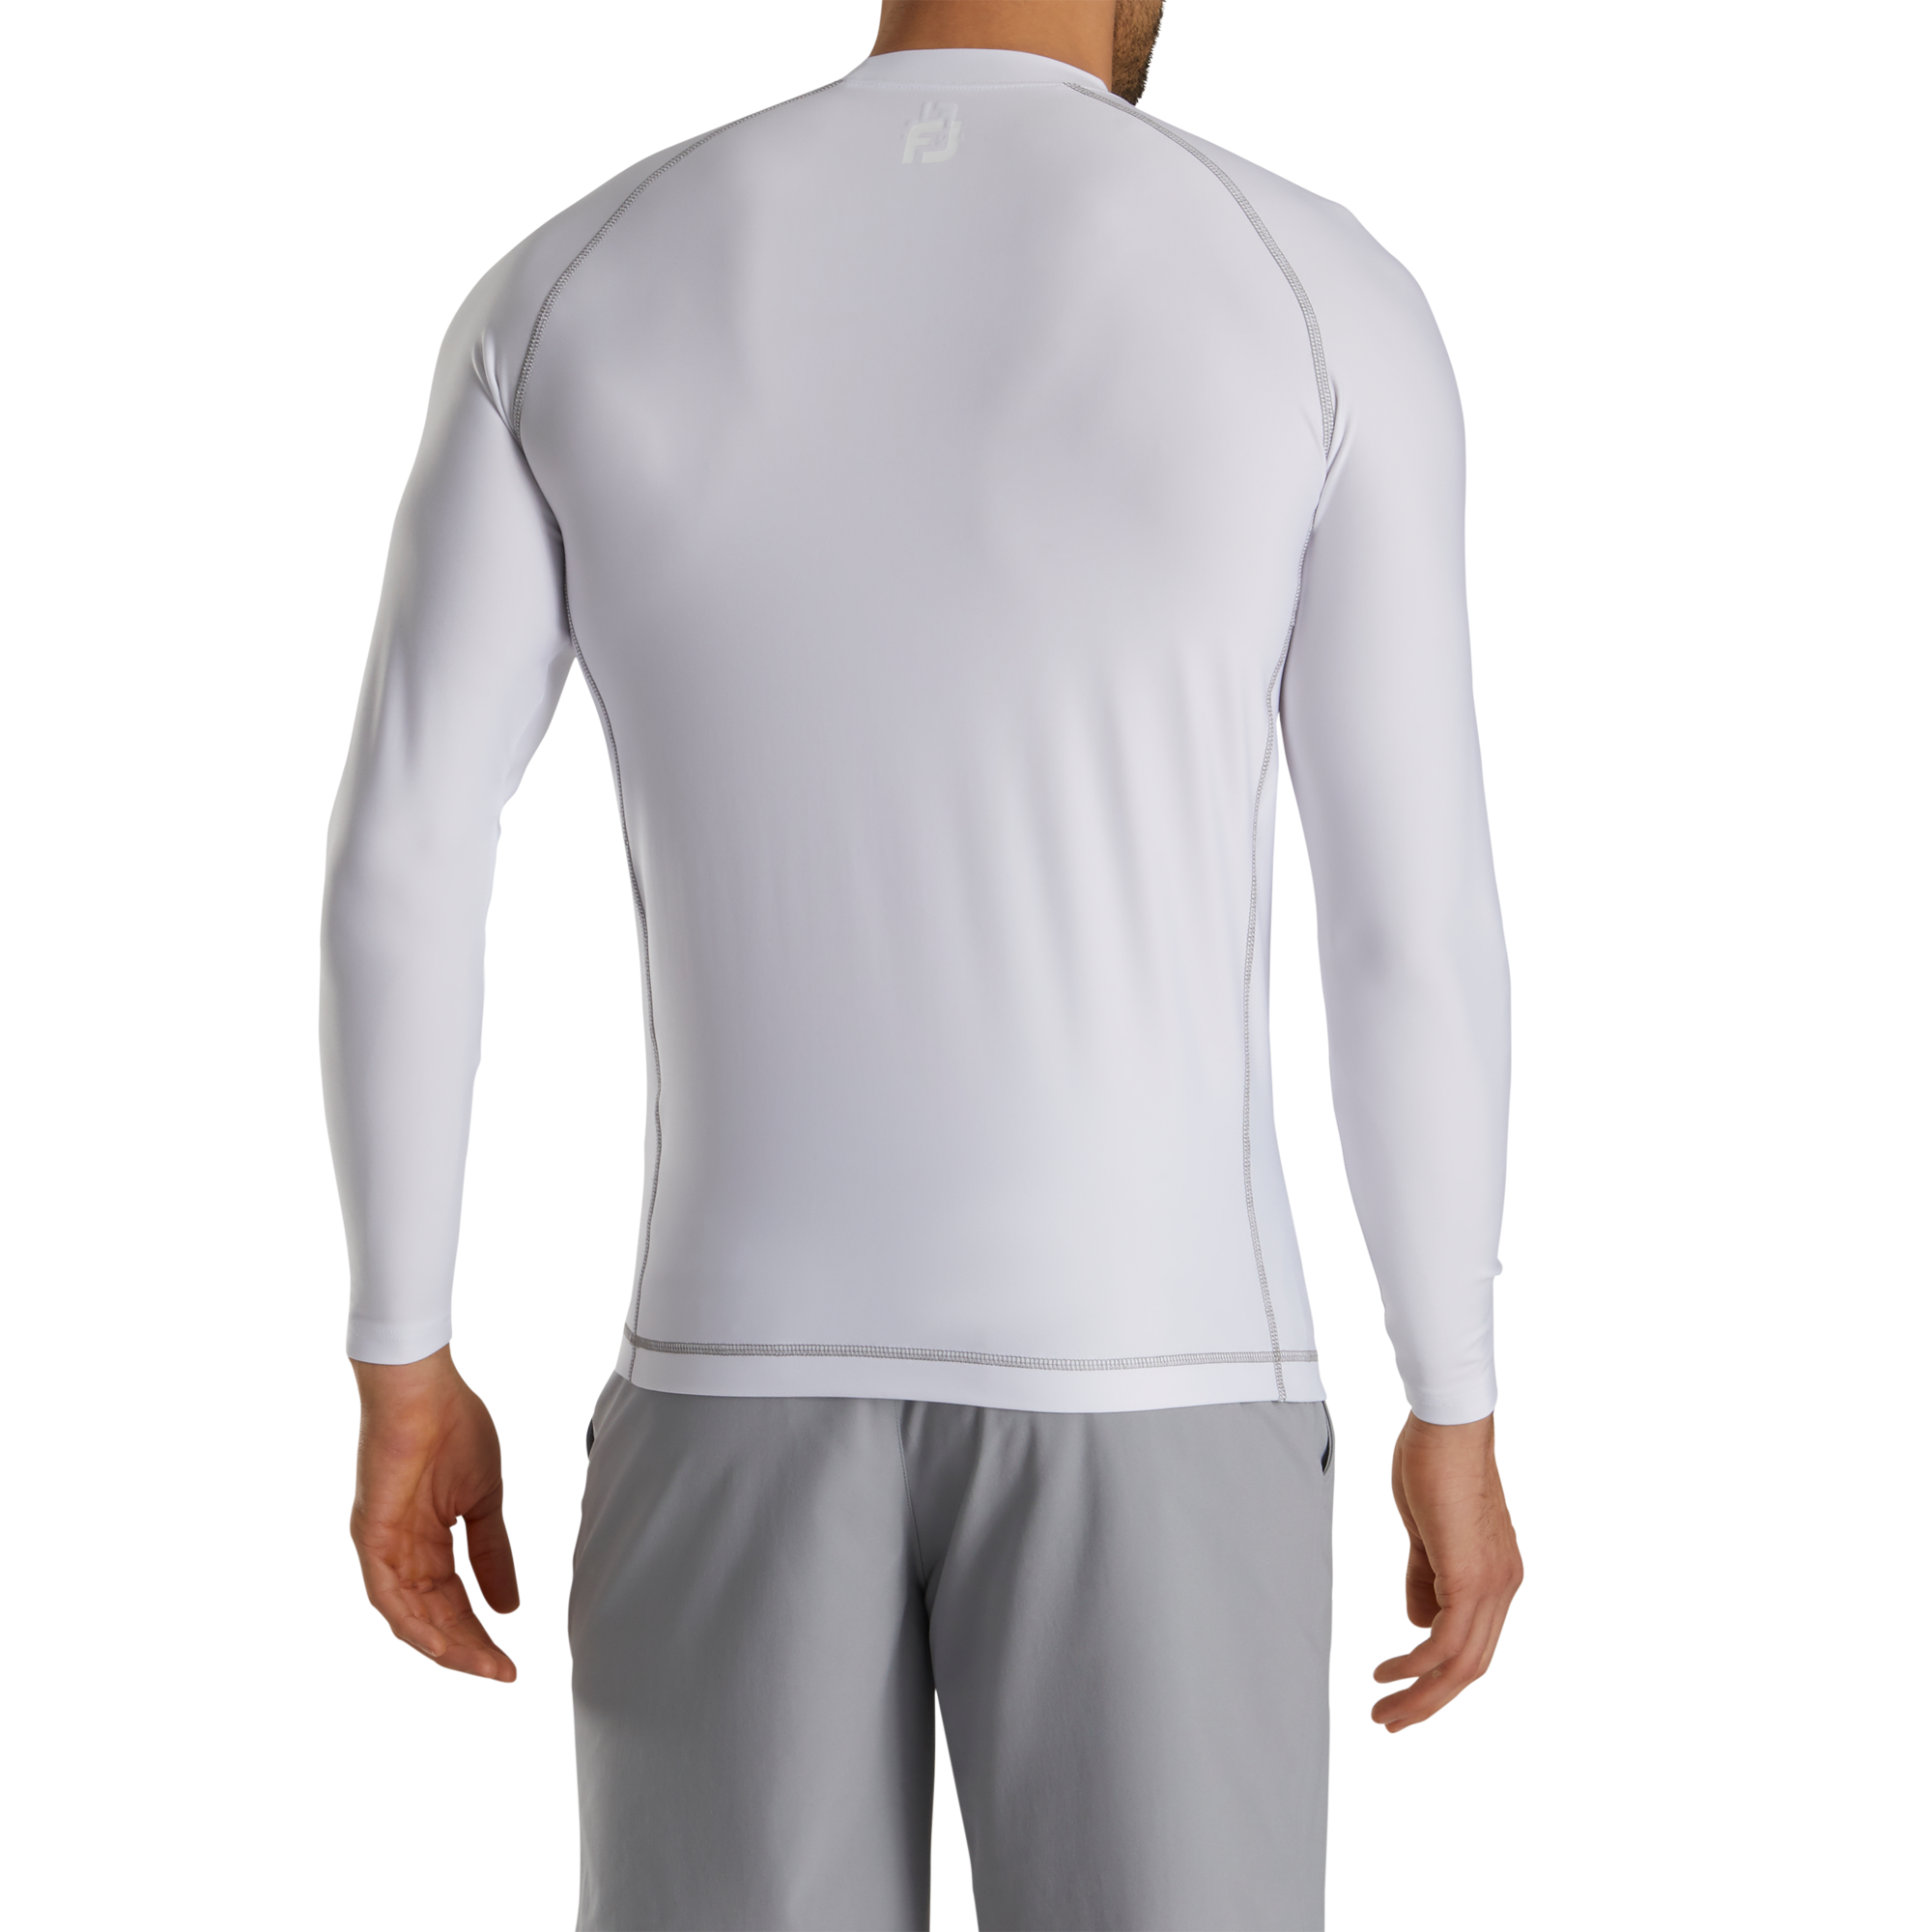 FootJoy Thermal Base Layer Shirt - Puetz Golf